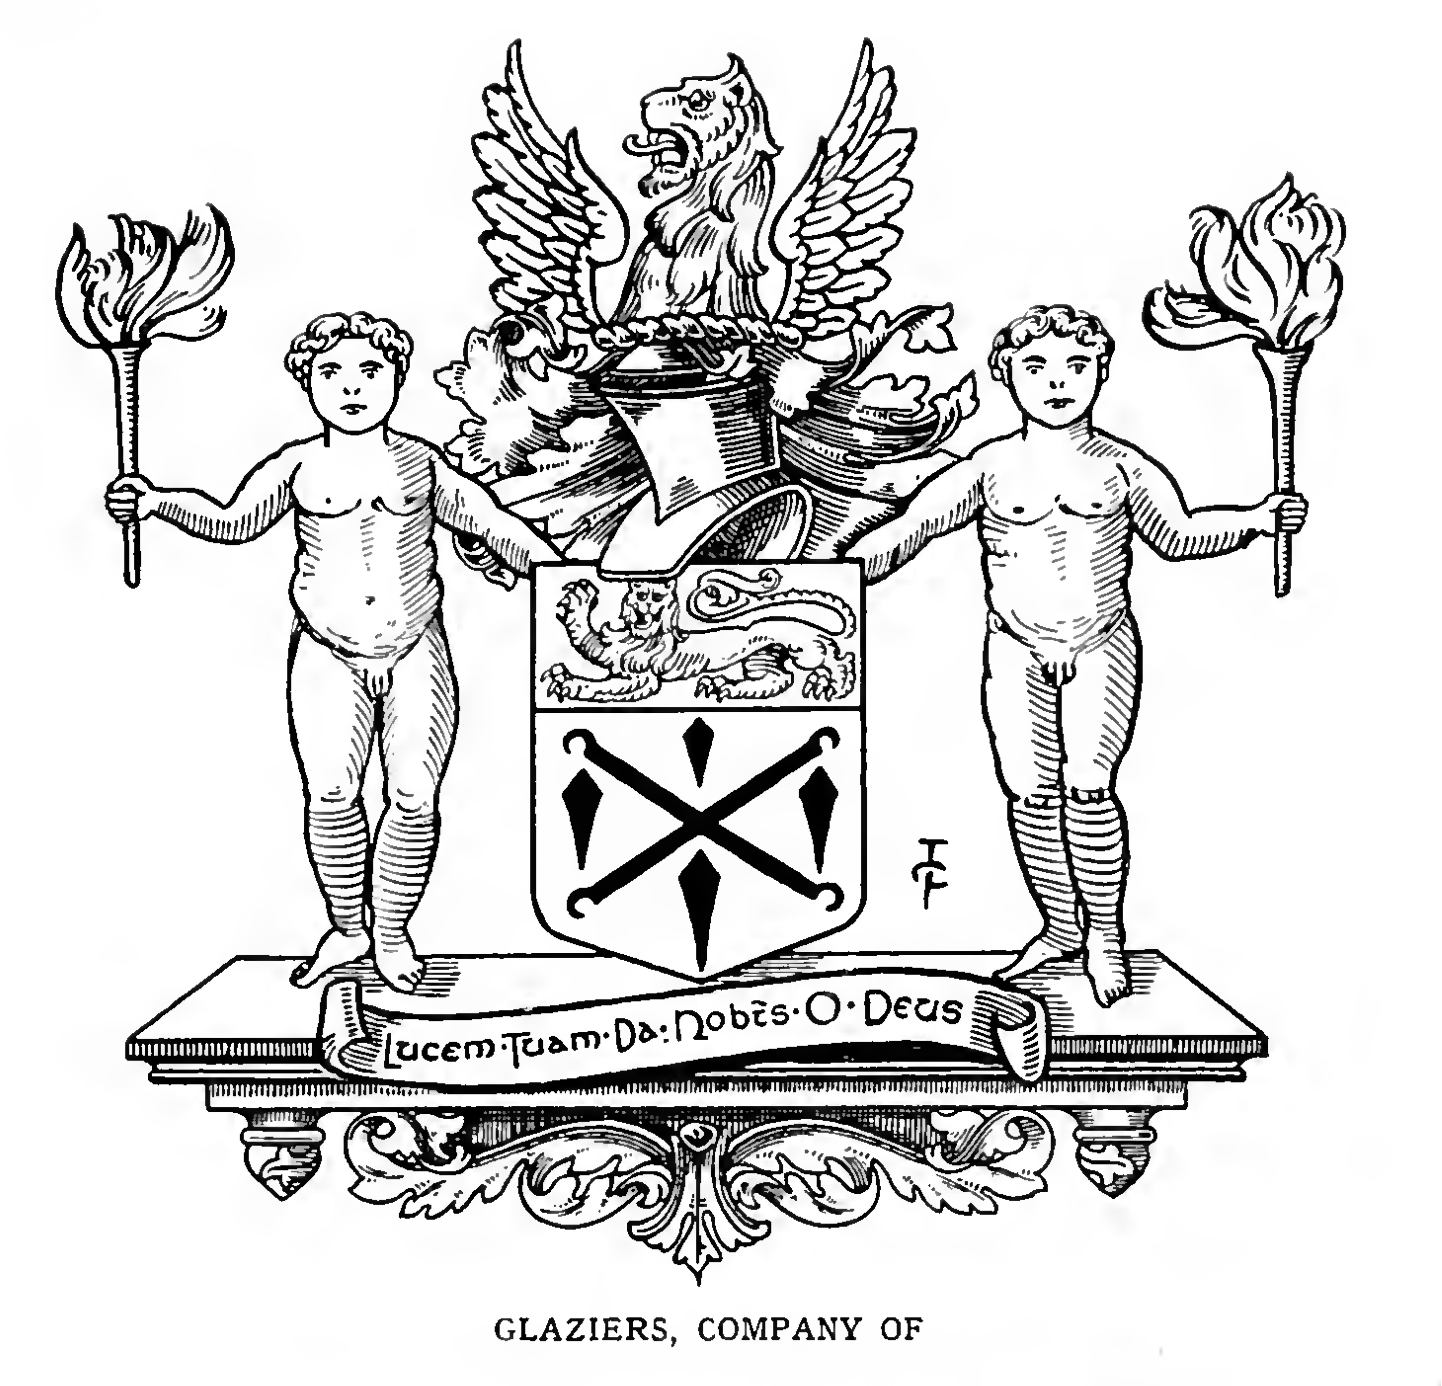 GLAZIERS, The Worshipful Company of, London.